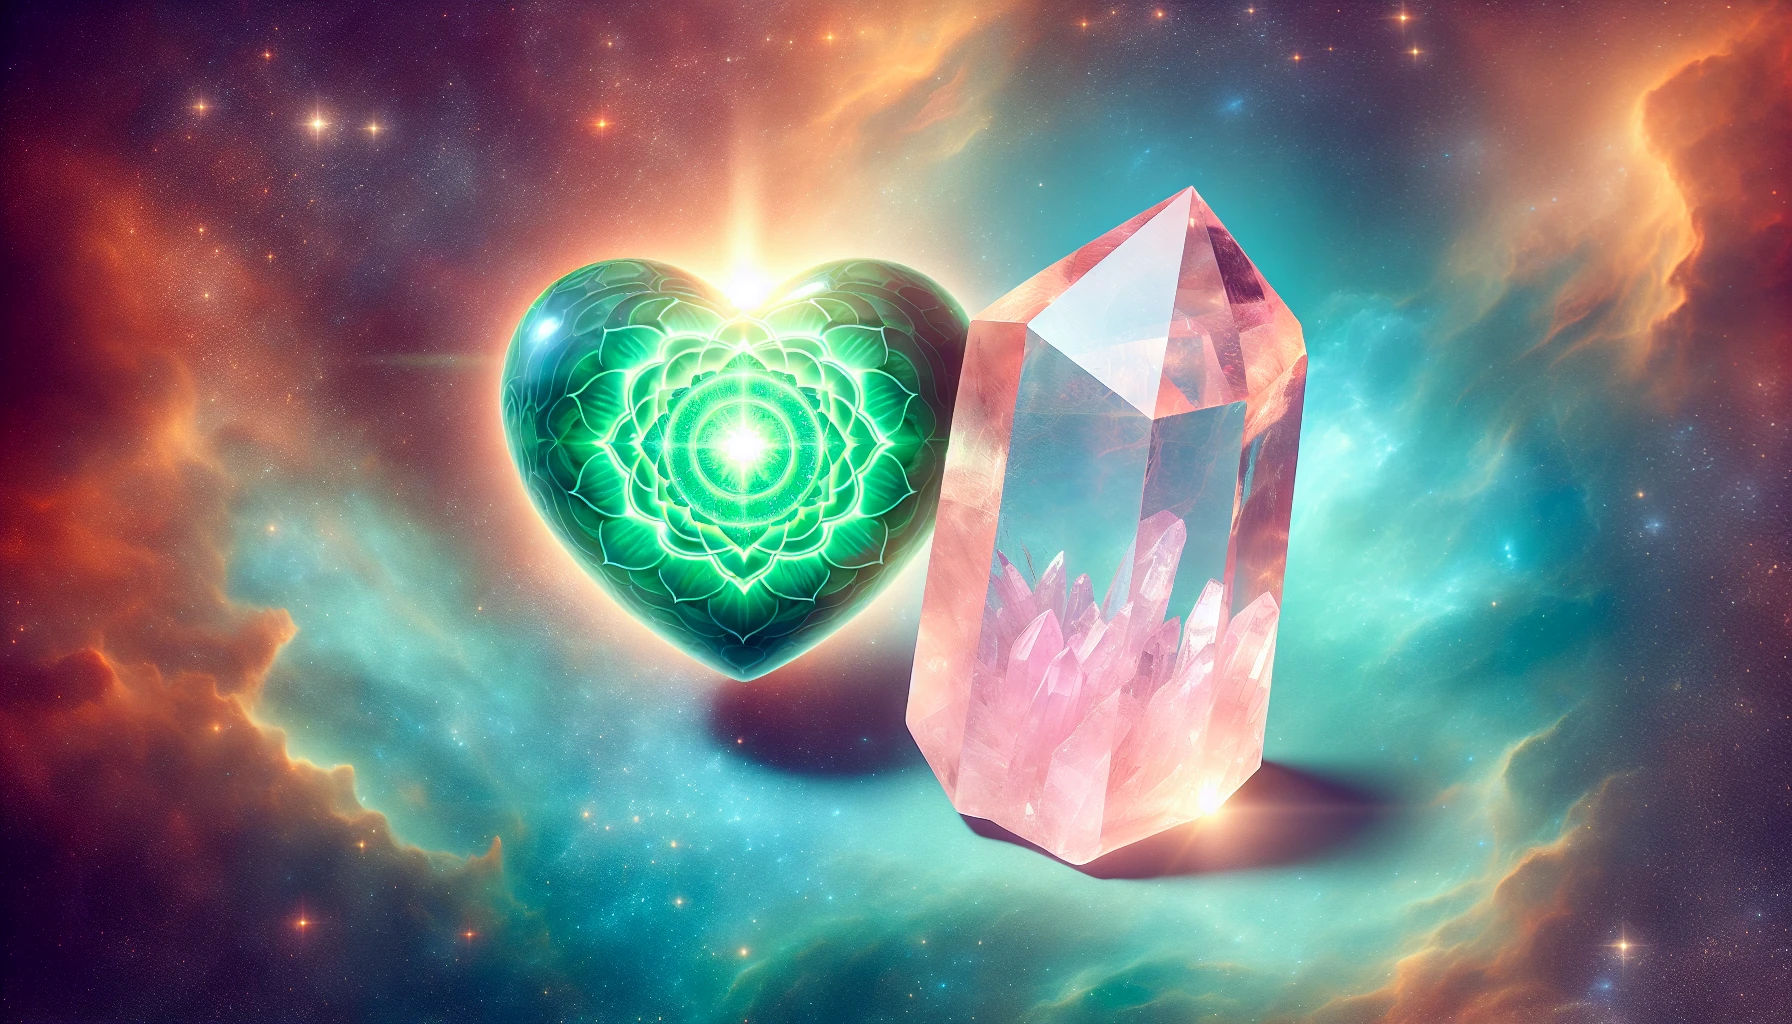 Heart chakra and rose quartz illustration